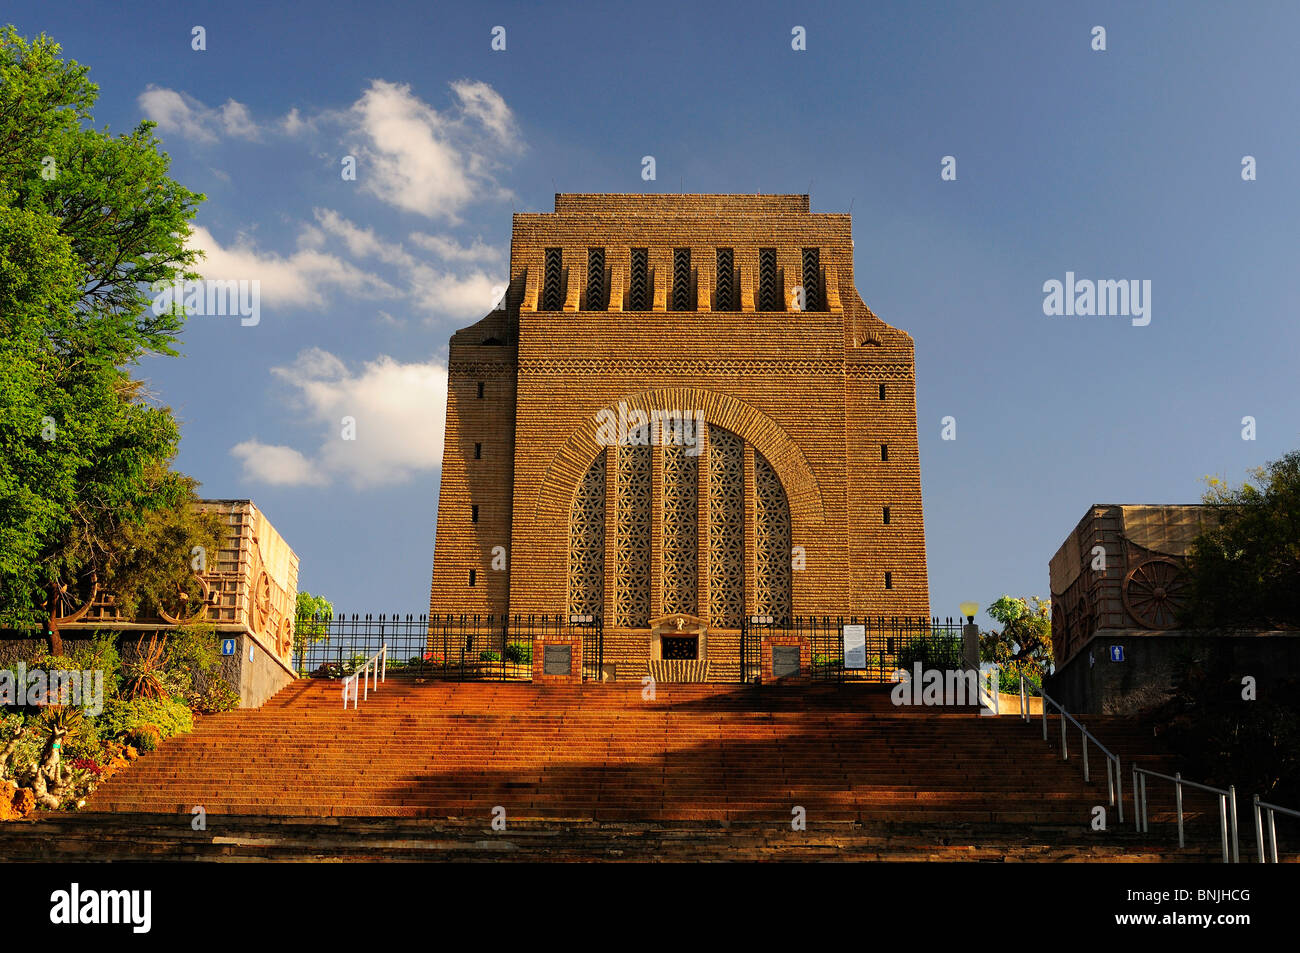 Voortrekker Monument Pretoria city Gauteng South Africa Boer history building Stock Photo